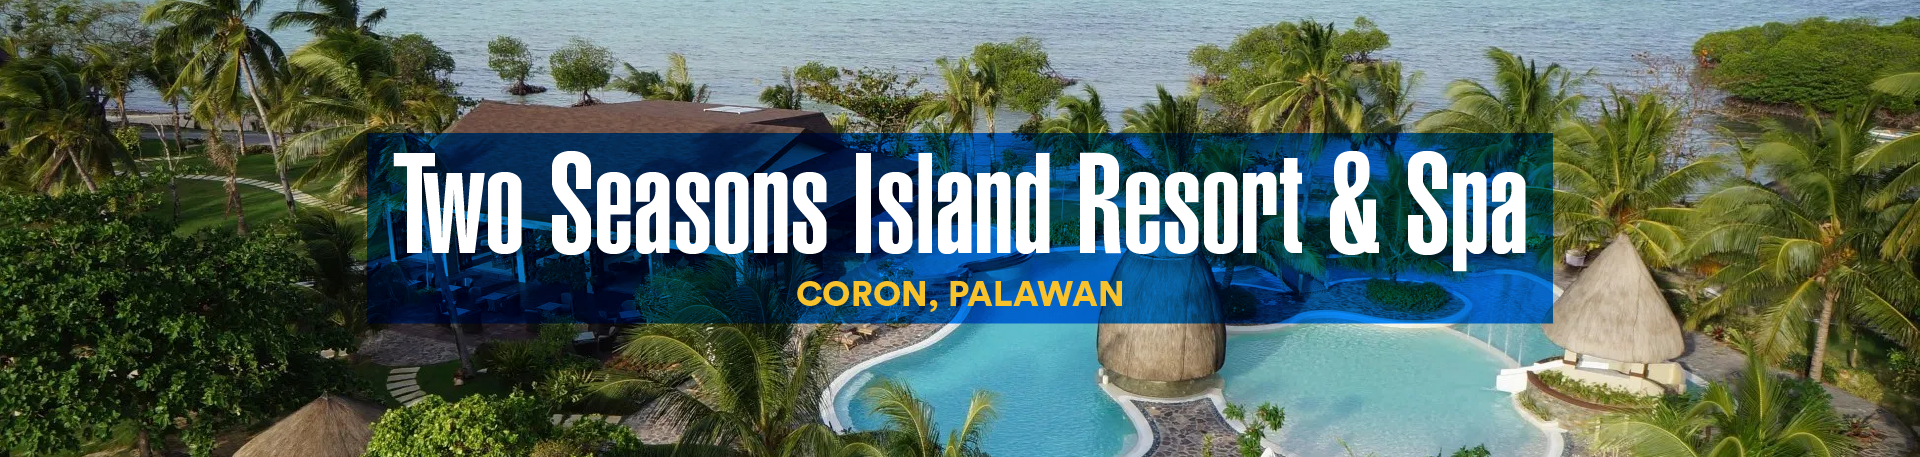 Two Seasons Island Resort and Spa, Coron, Palawan